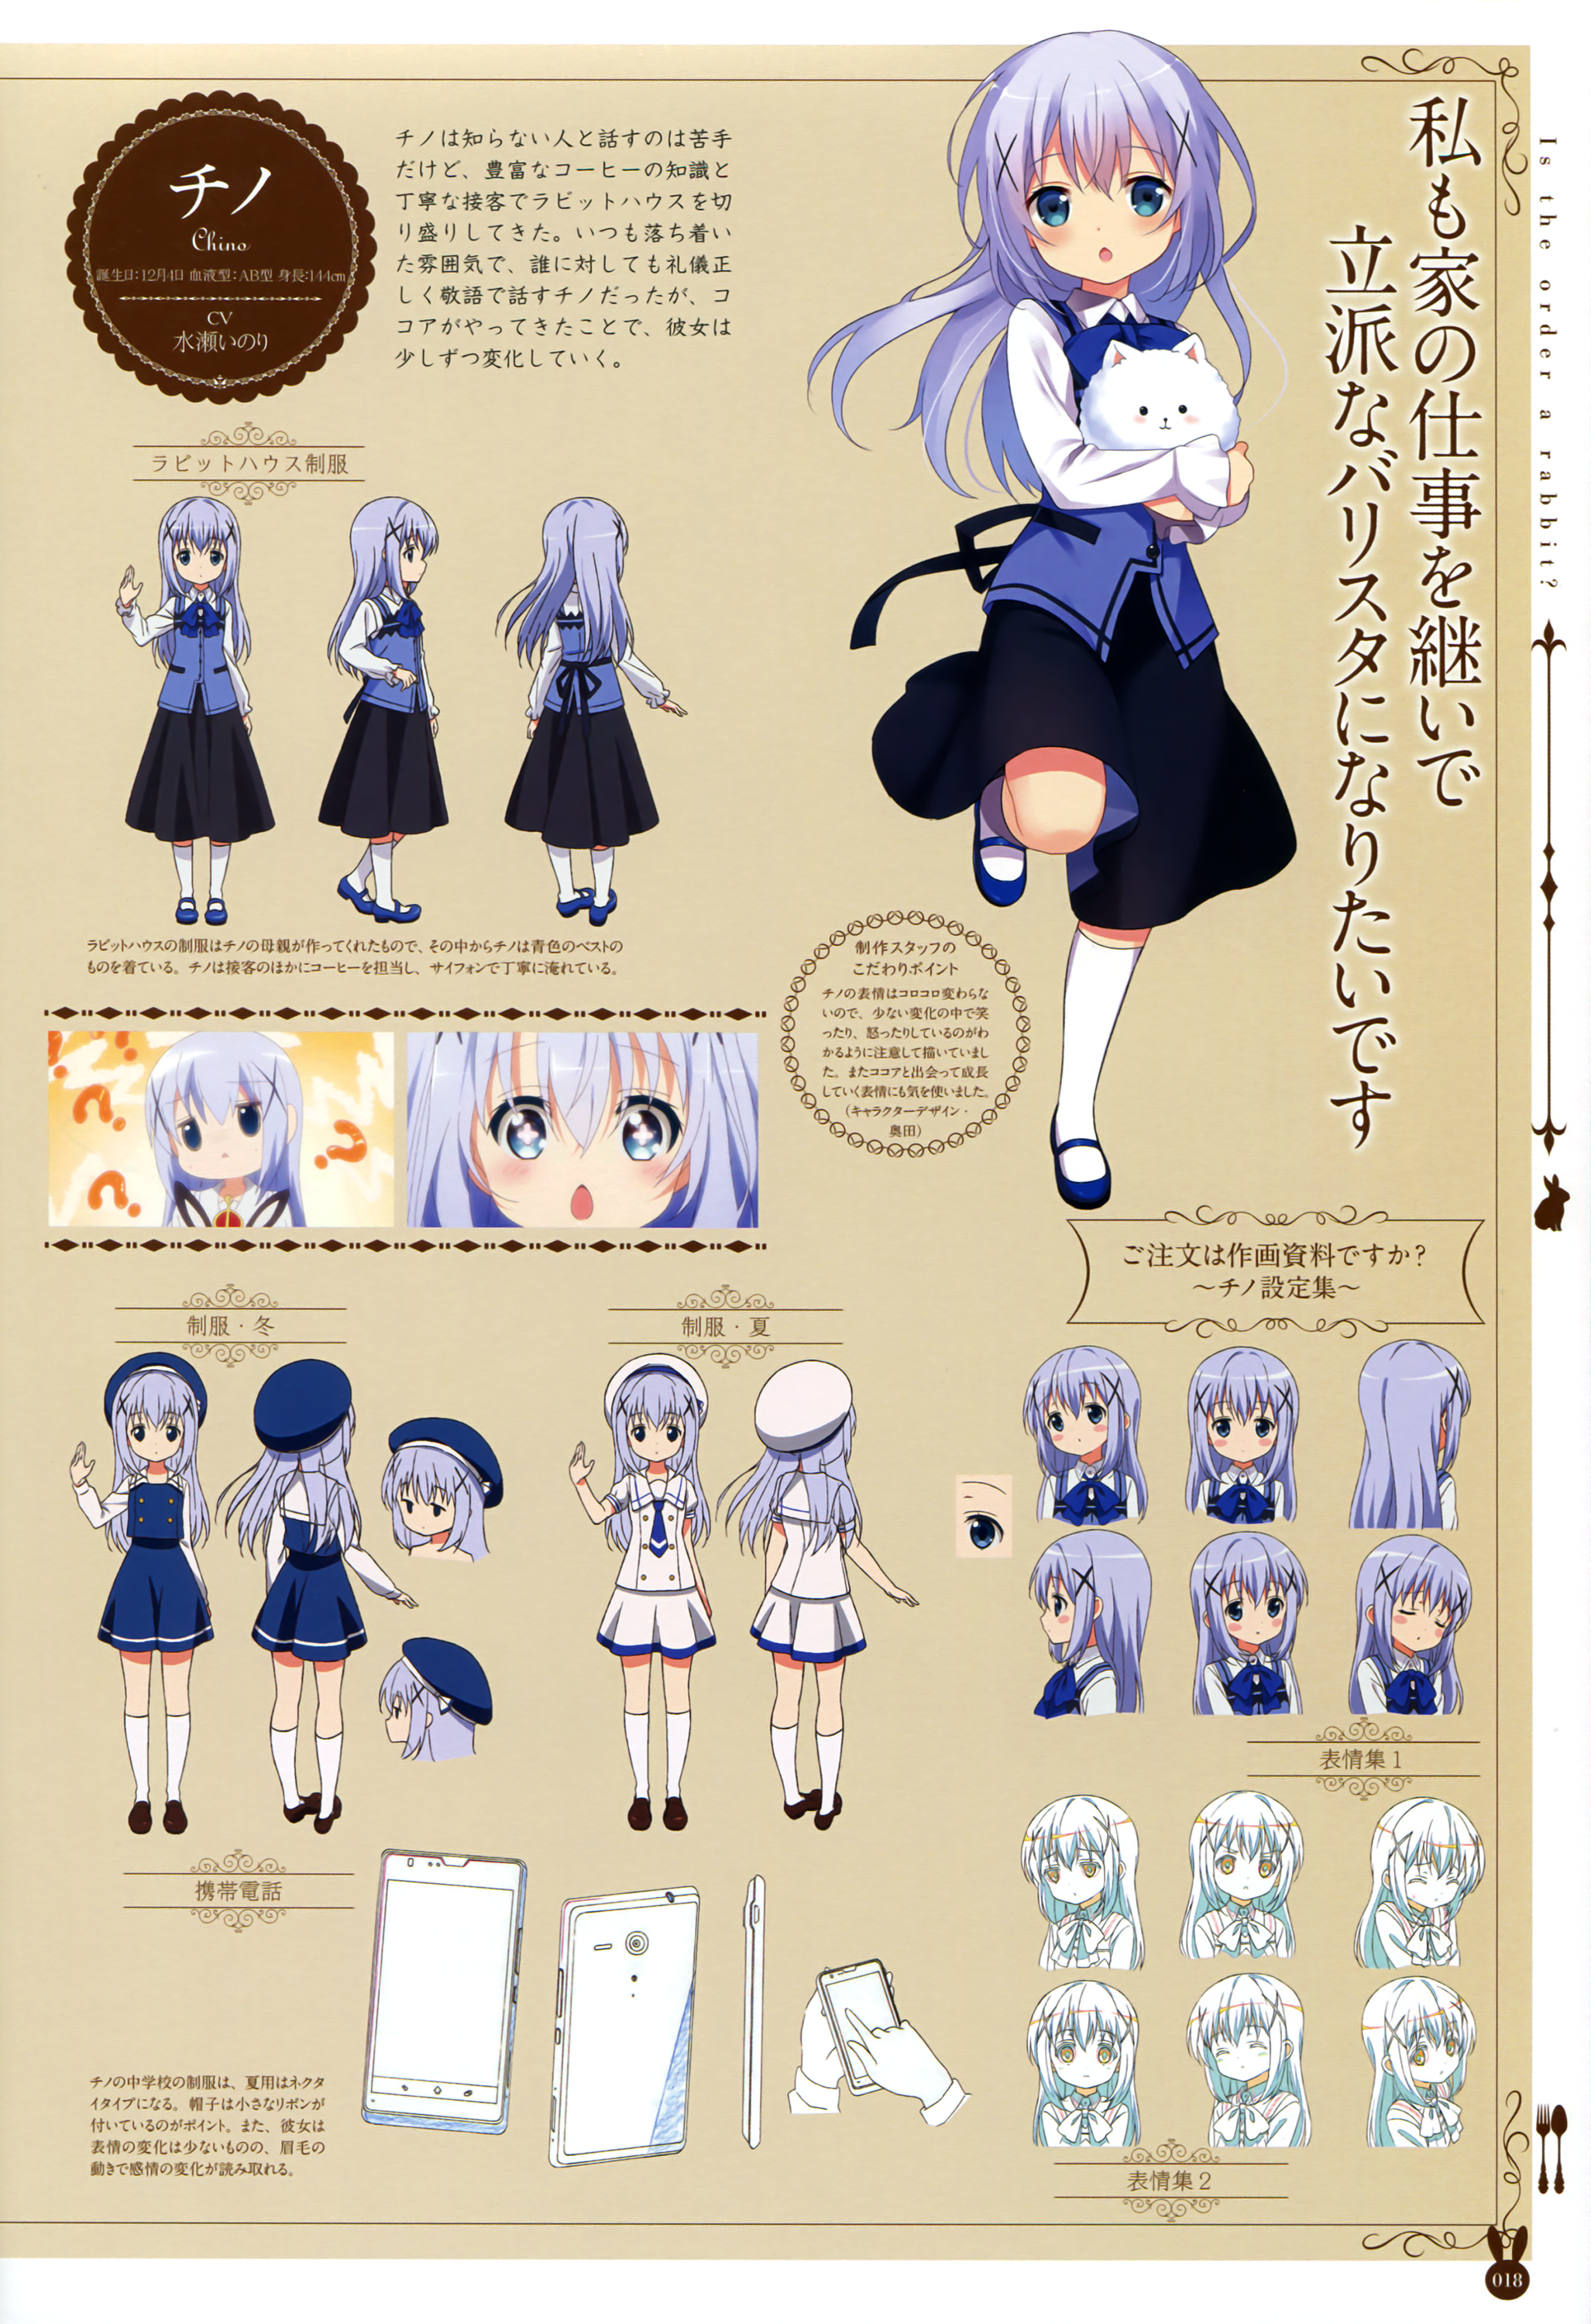 About Picture, -----# - Character Name : Kafuu Chino - Anime : Gochuumon  wa Usagi Desu ka all resource recp…